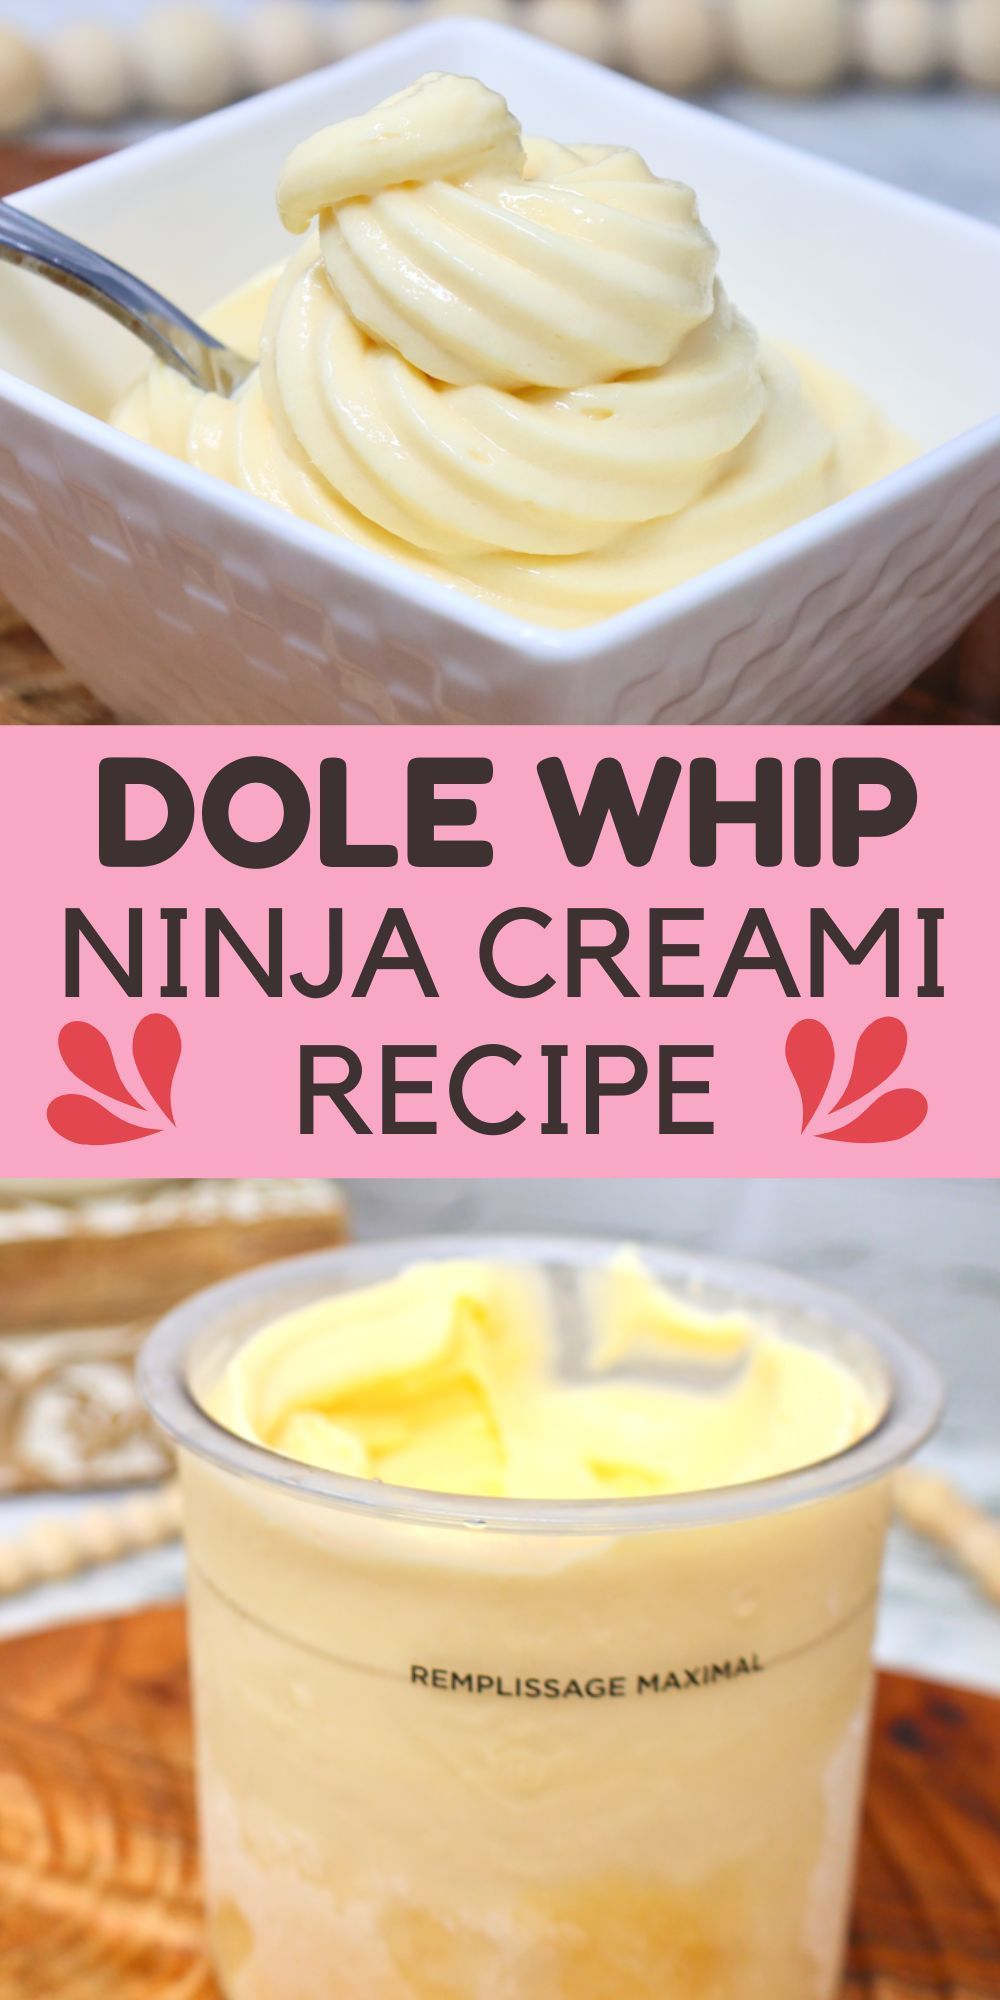 Dole Whip - Ninja Creami Recipe!